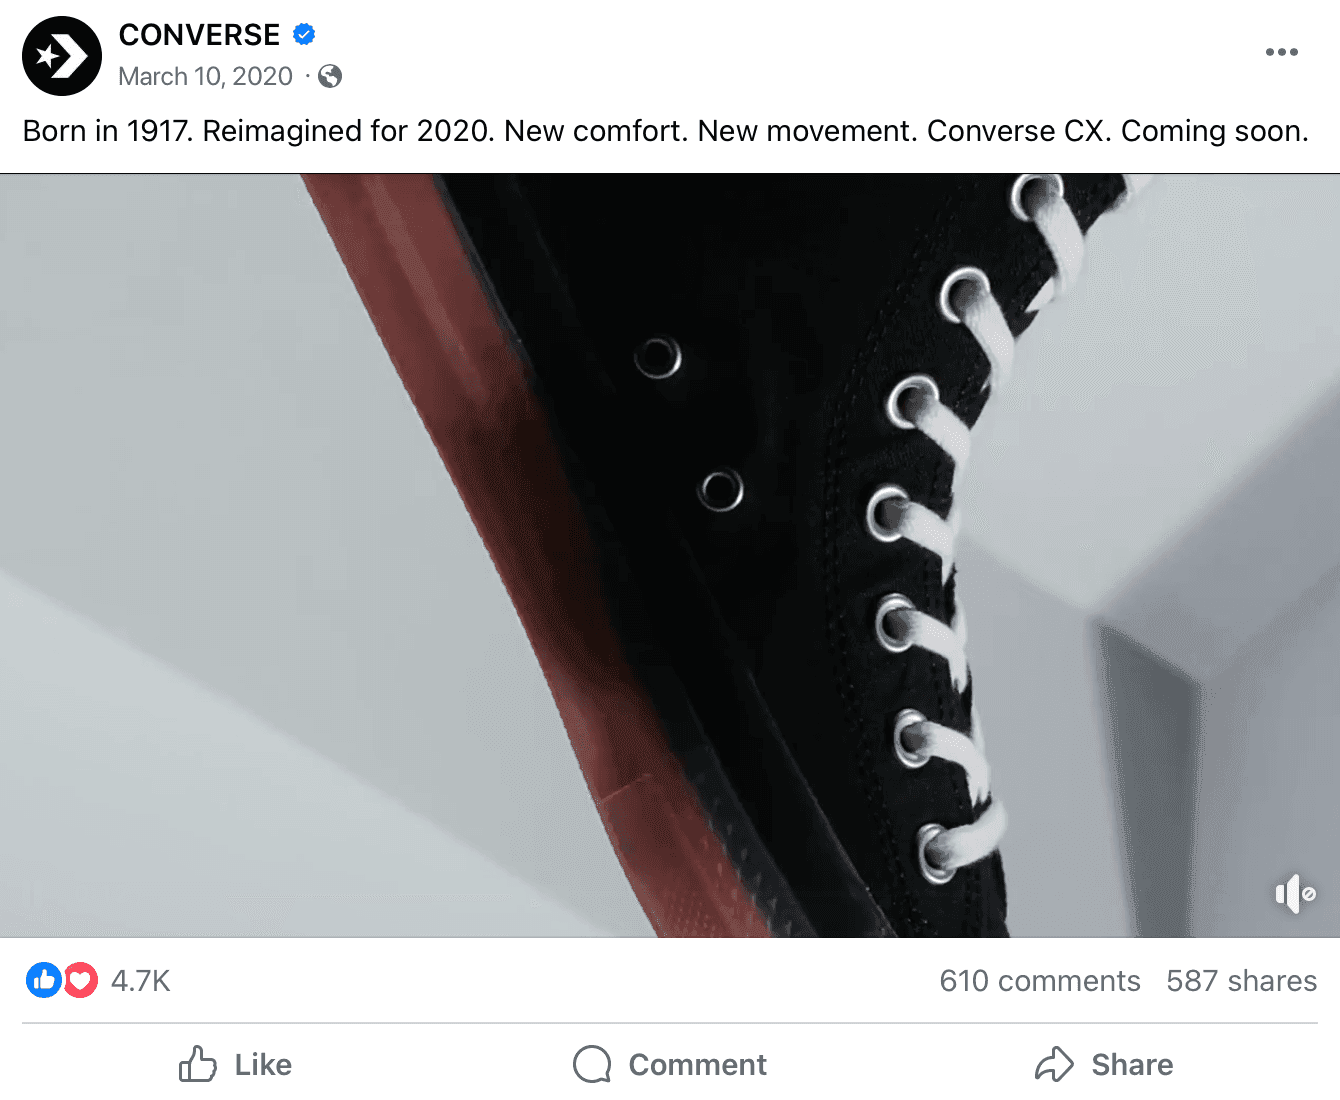 New Converse CX shoe product tease